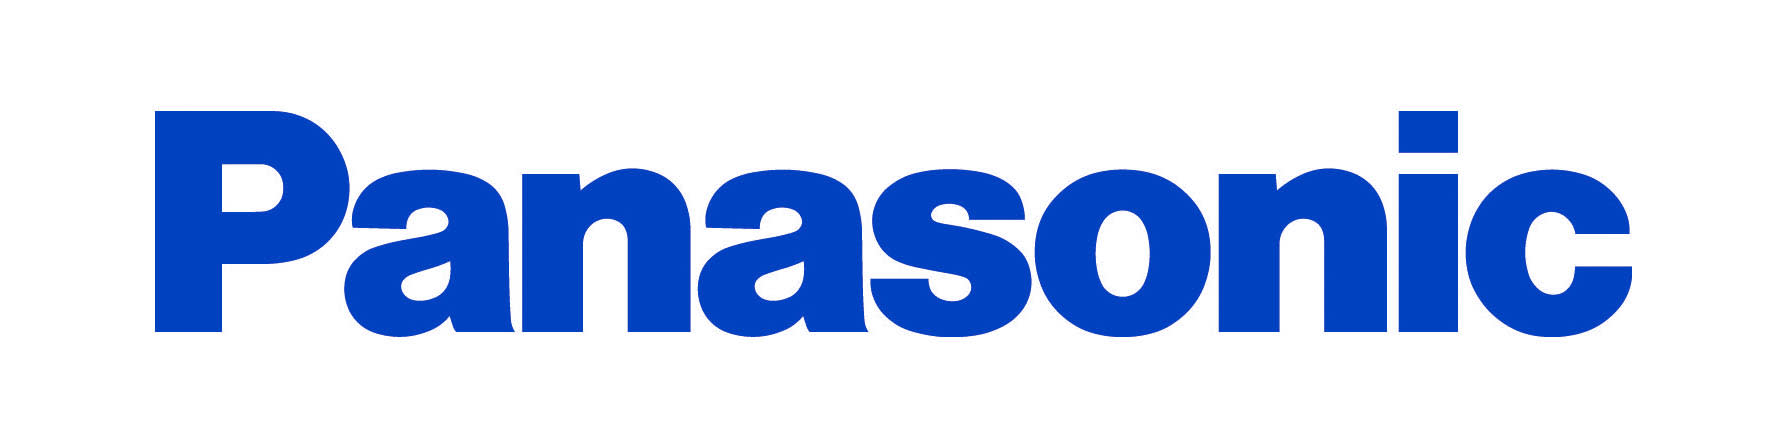 Panasonic logo bl posi JPEG